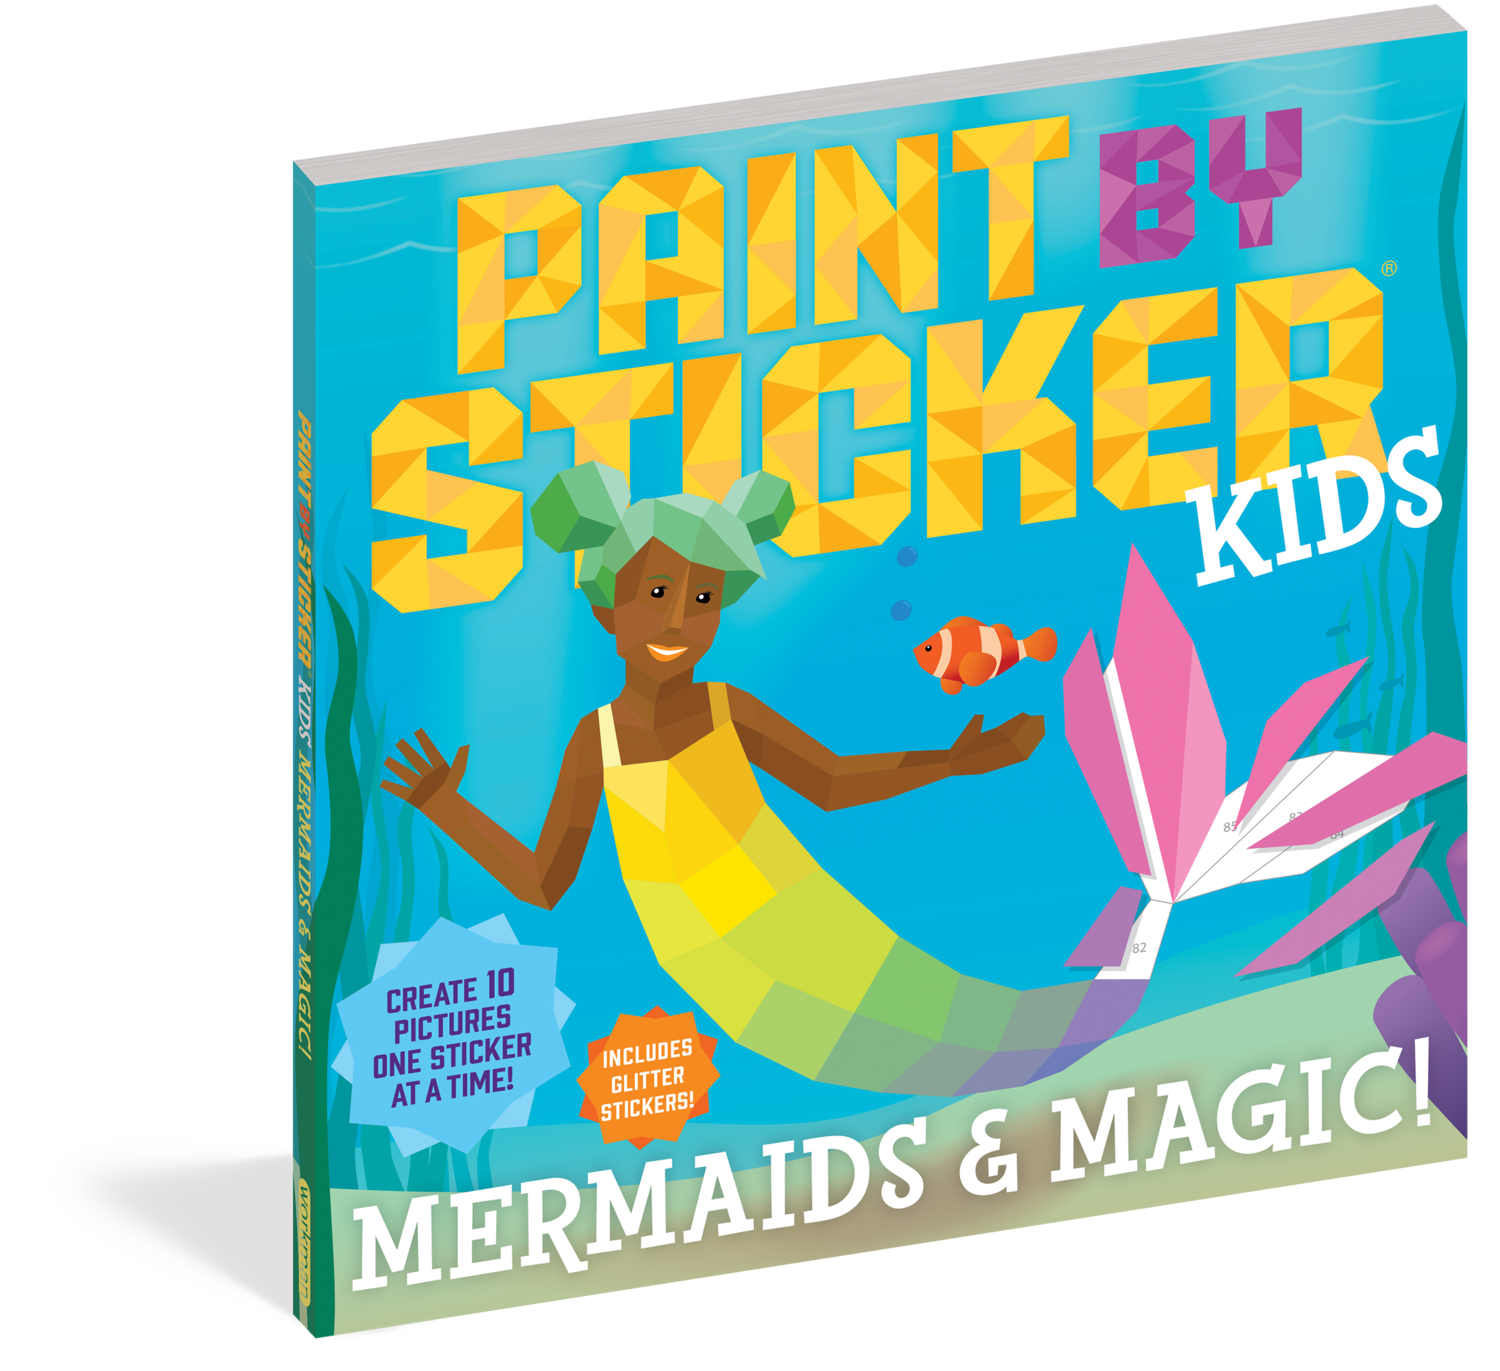 Mermaids & Magic Paint By Sticker